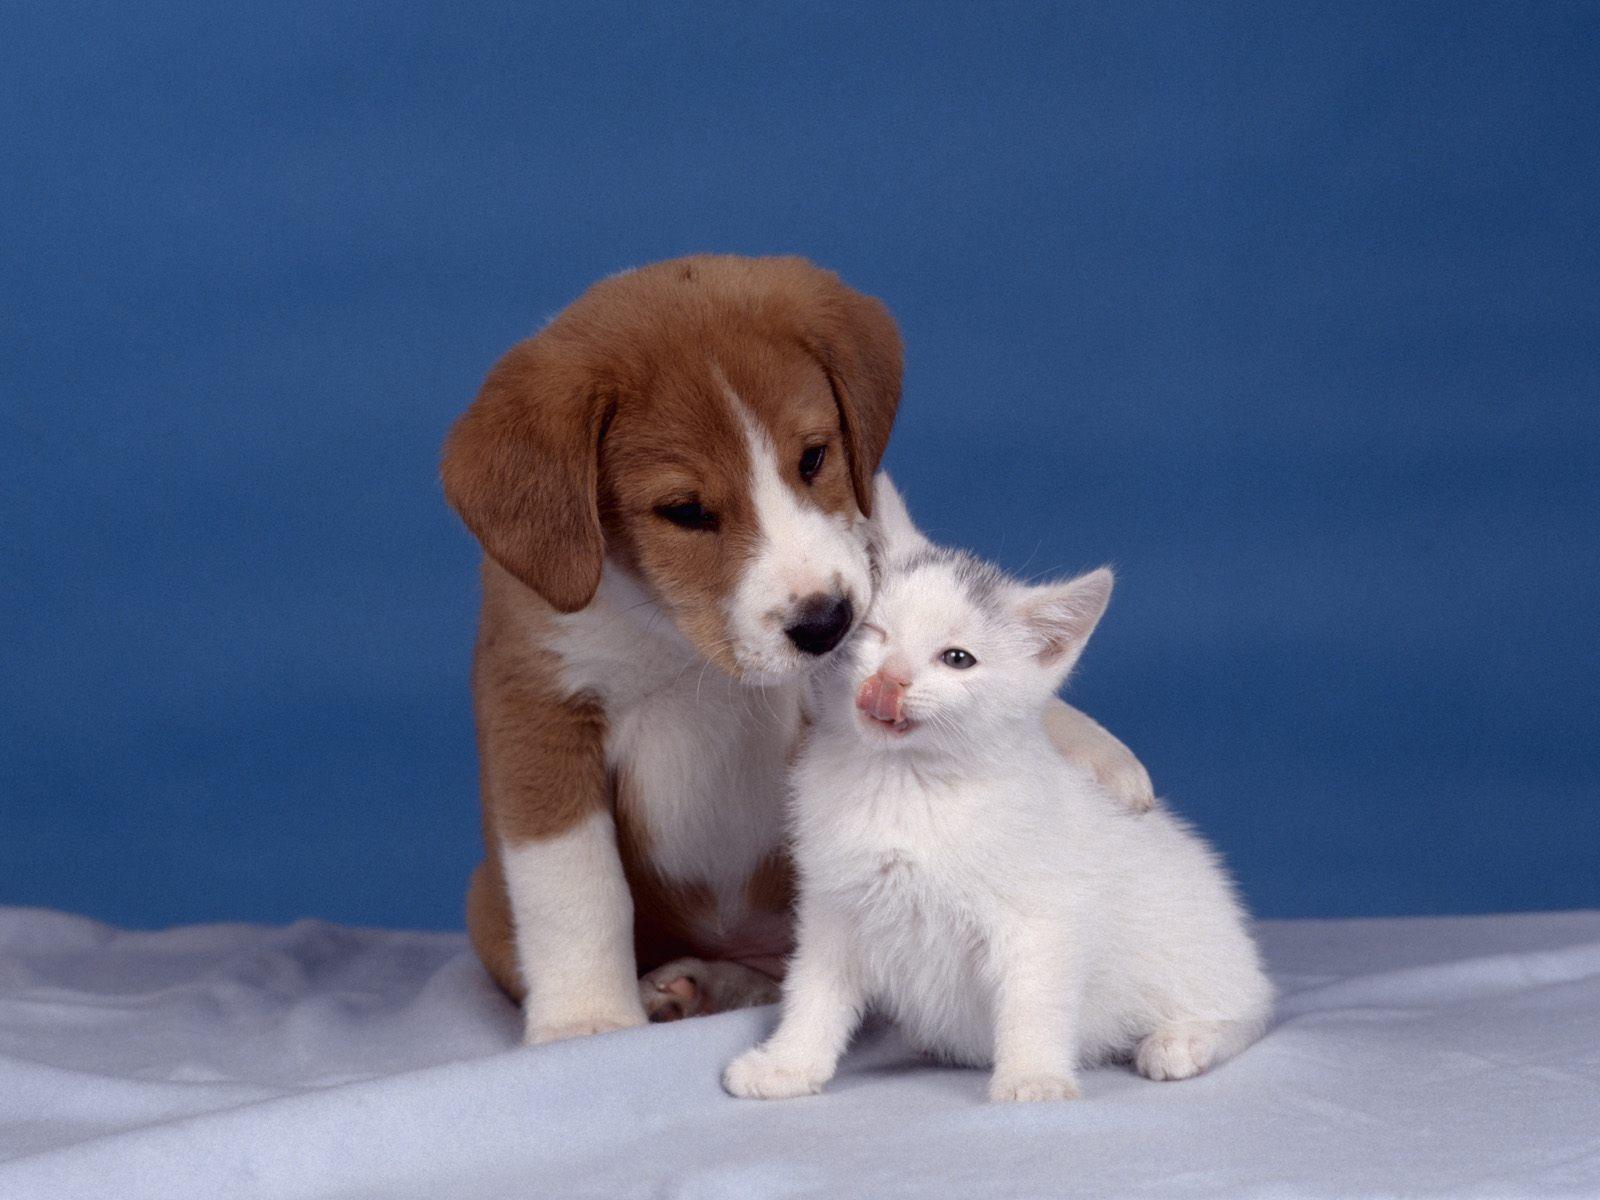 Kitten and Puppy - Kittens Wallpaper (12929269) - Fanpop